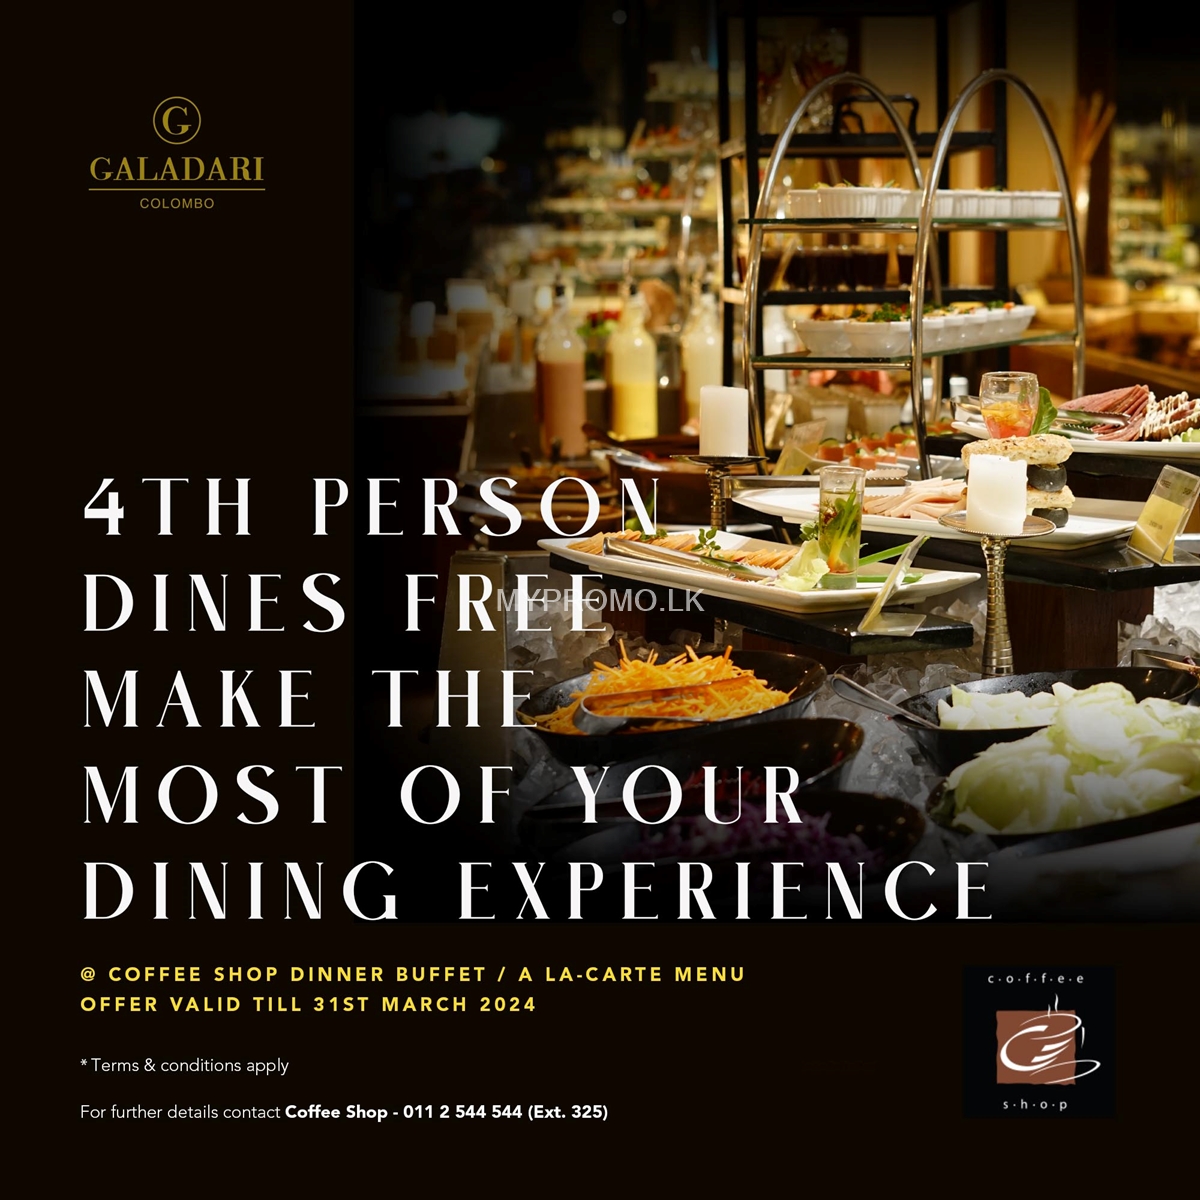 4th Person Dines Free at Galadari Hotel